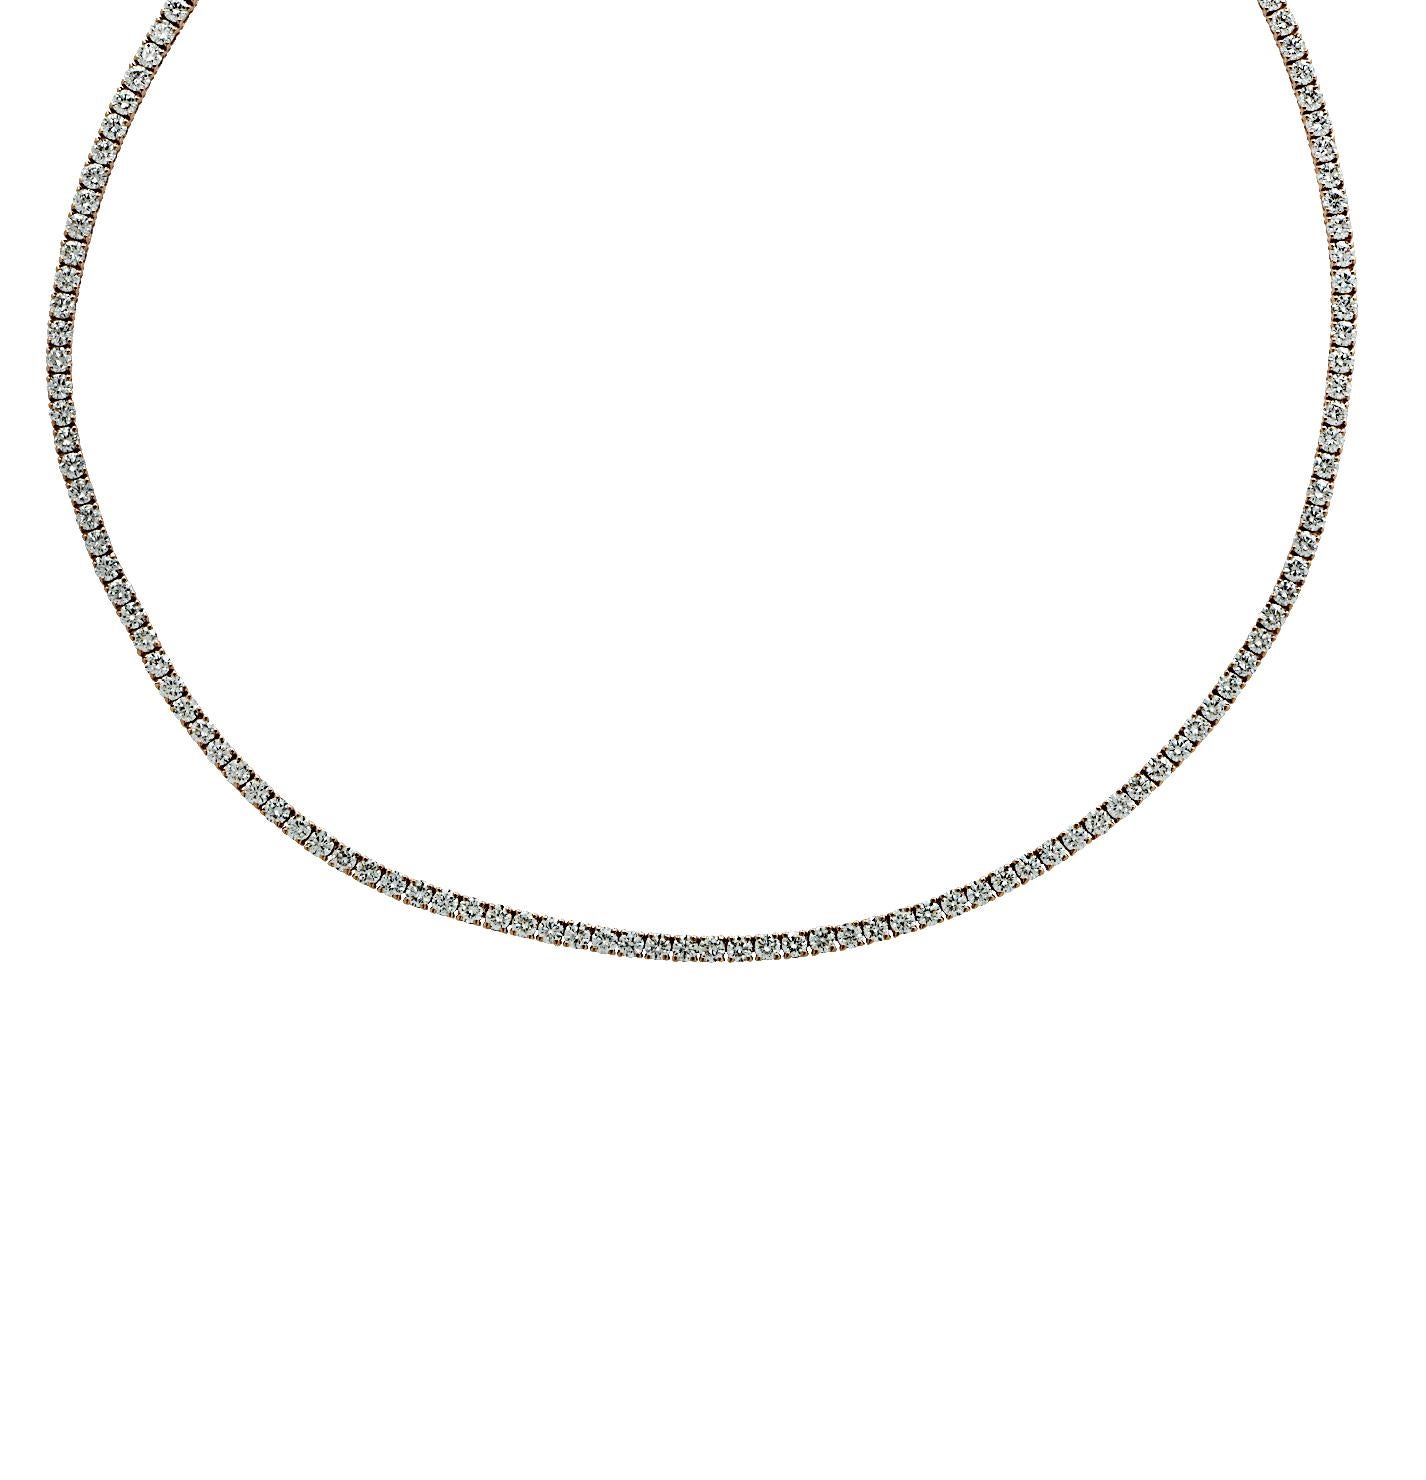 Round Cut Vivid Diamonds 10.95 Carat Diamond Tennis Necklace For Sale